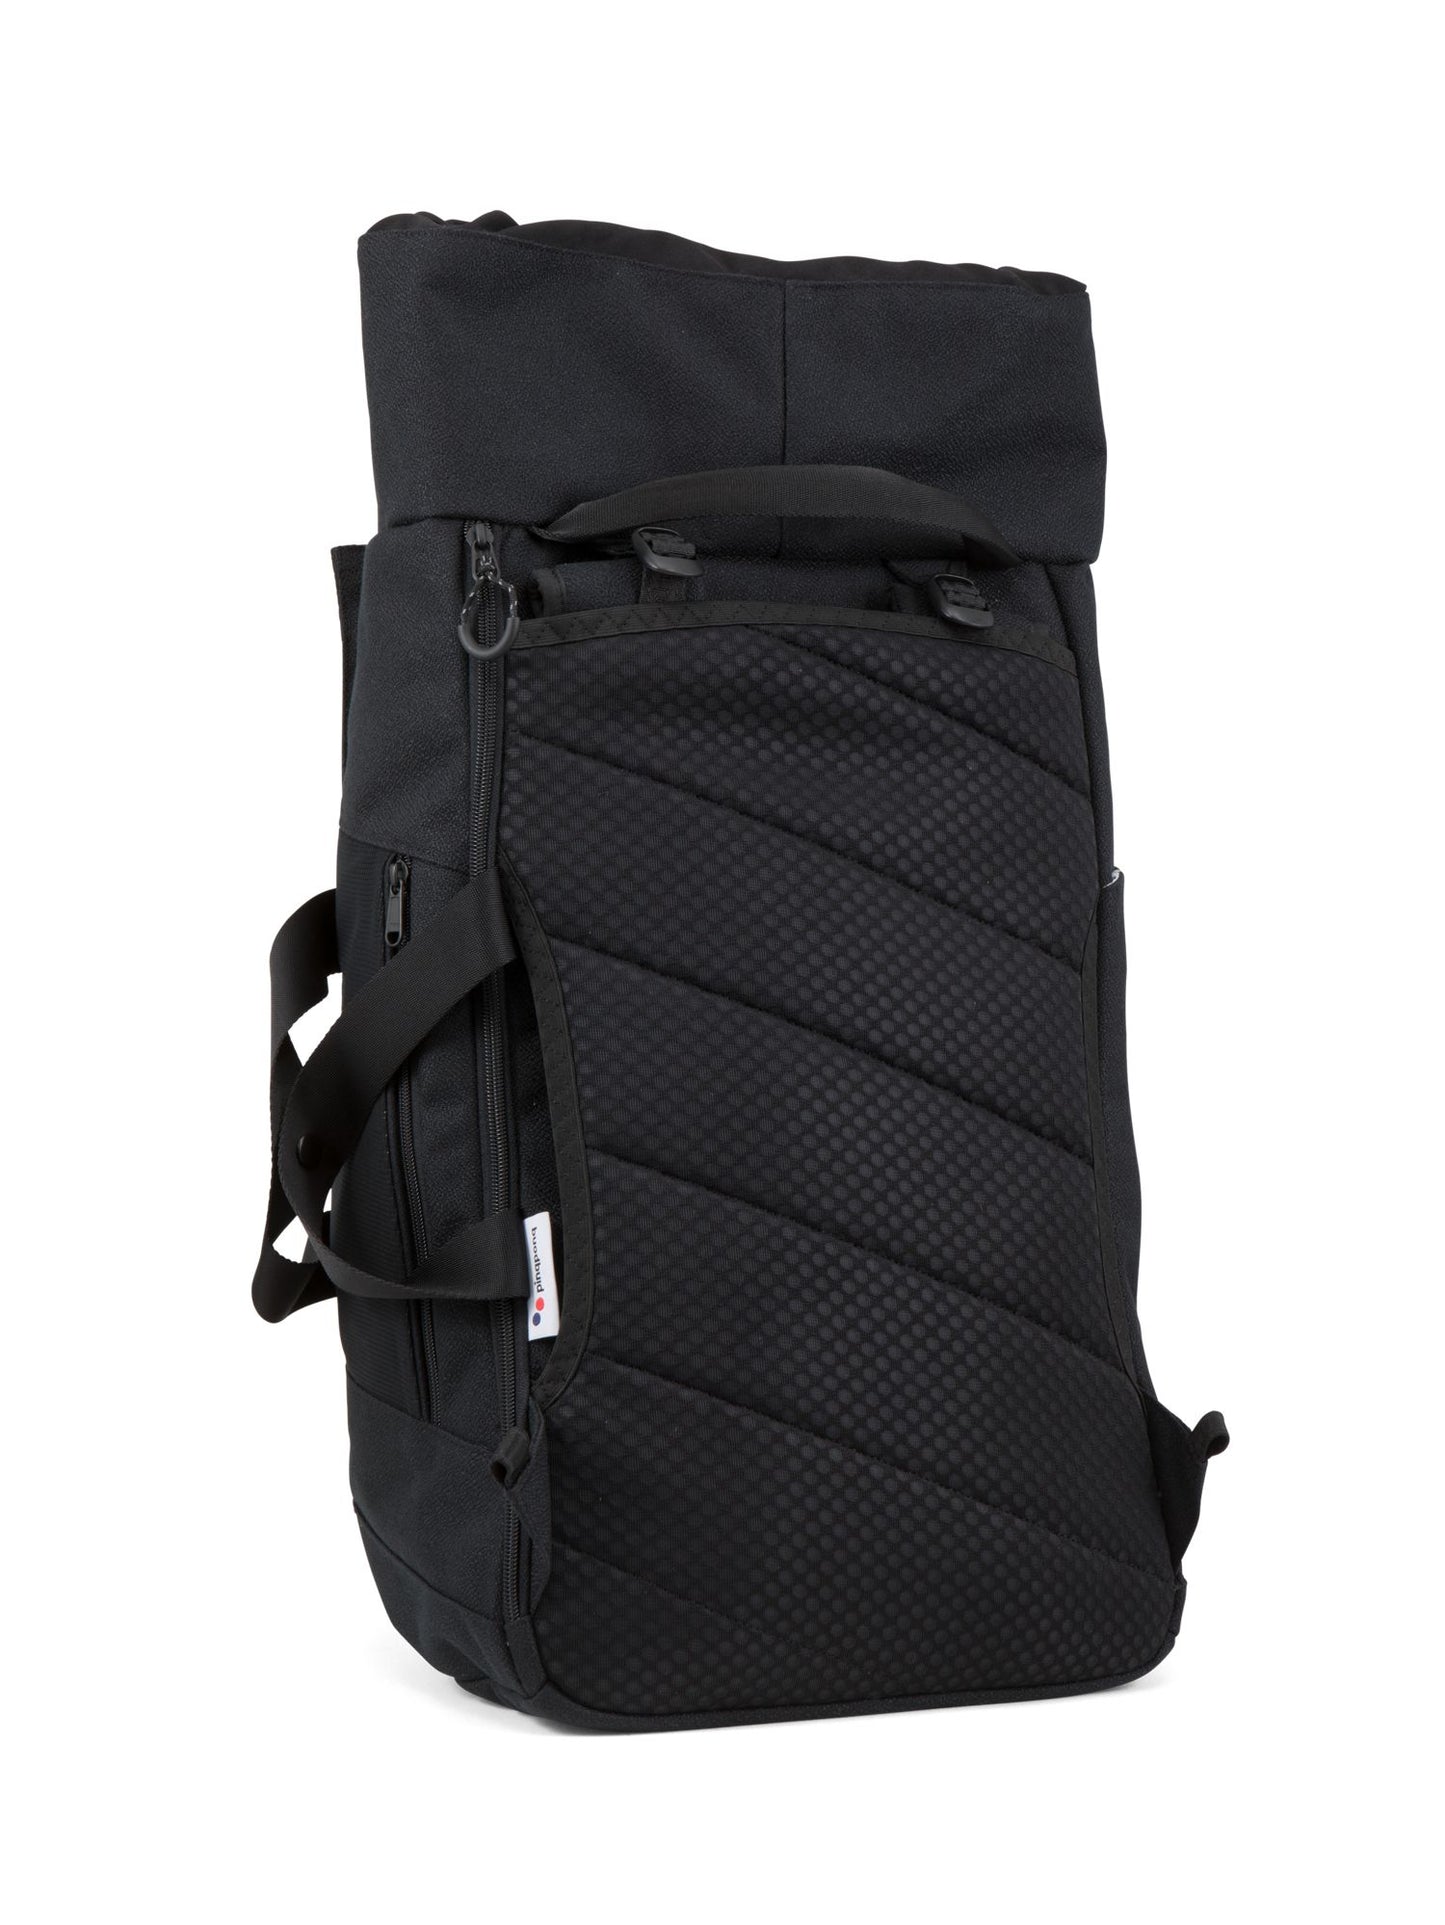 pinqponq-backpack-Blok-Large-Licorice-Black-detail